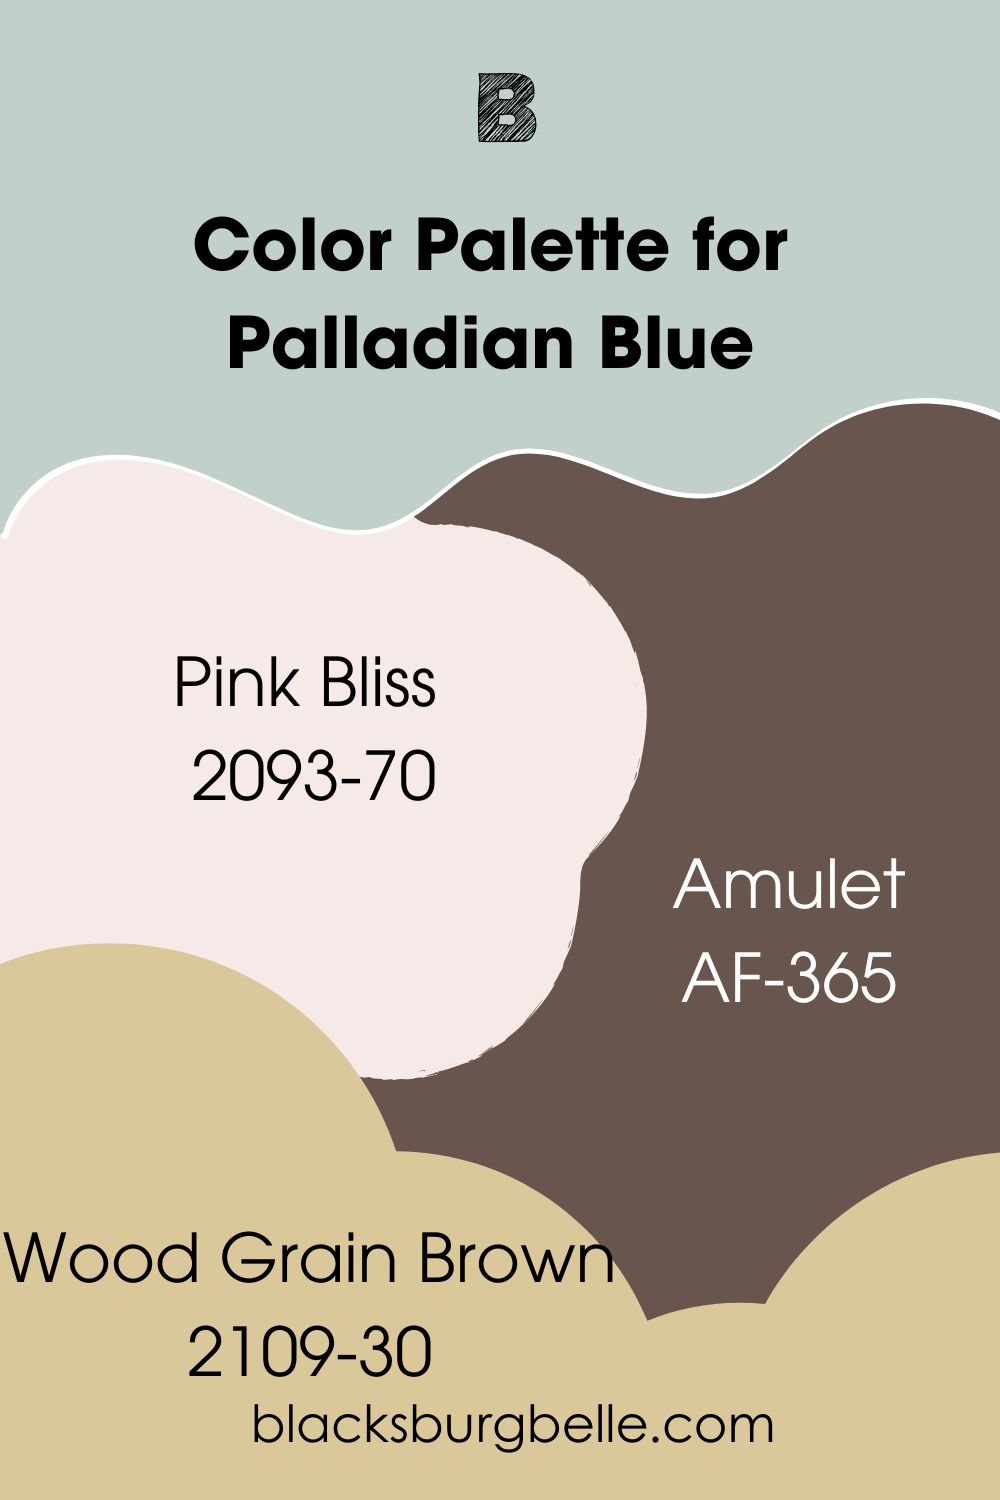 Color Palette for Palladian Blue